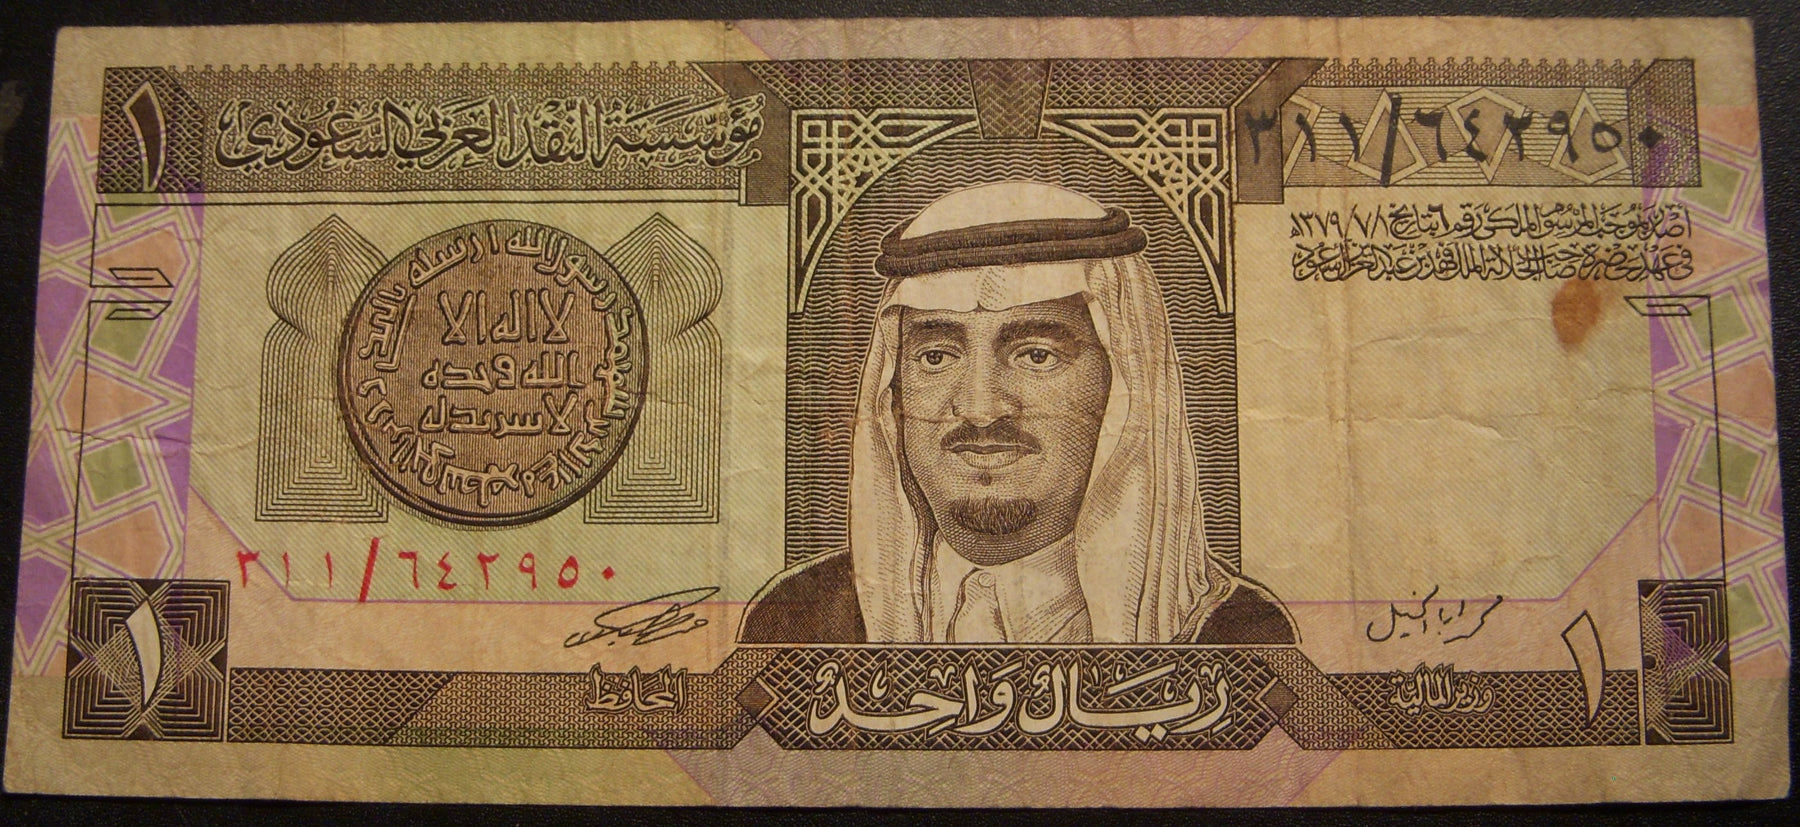 1983 1 Riyals Note - Saudi Arabia